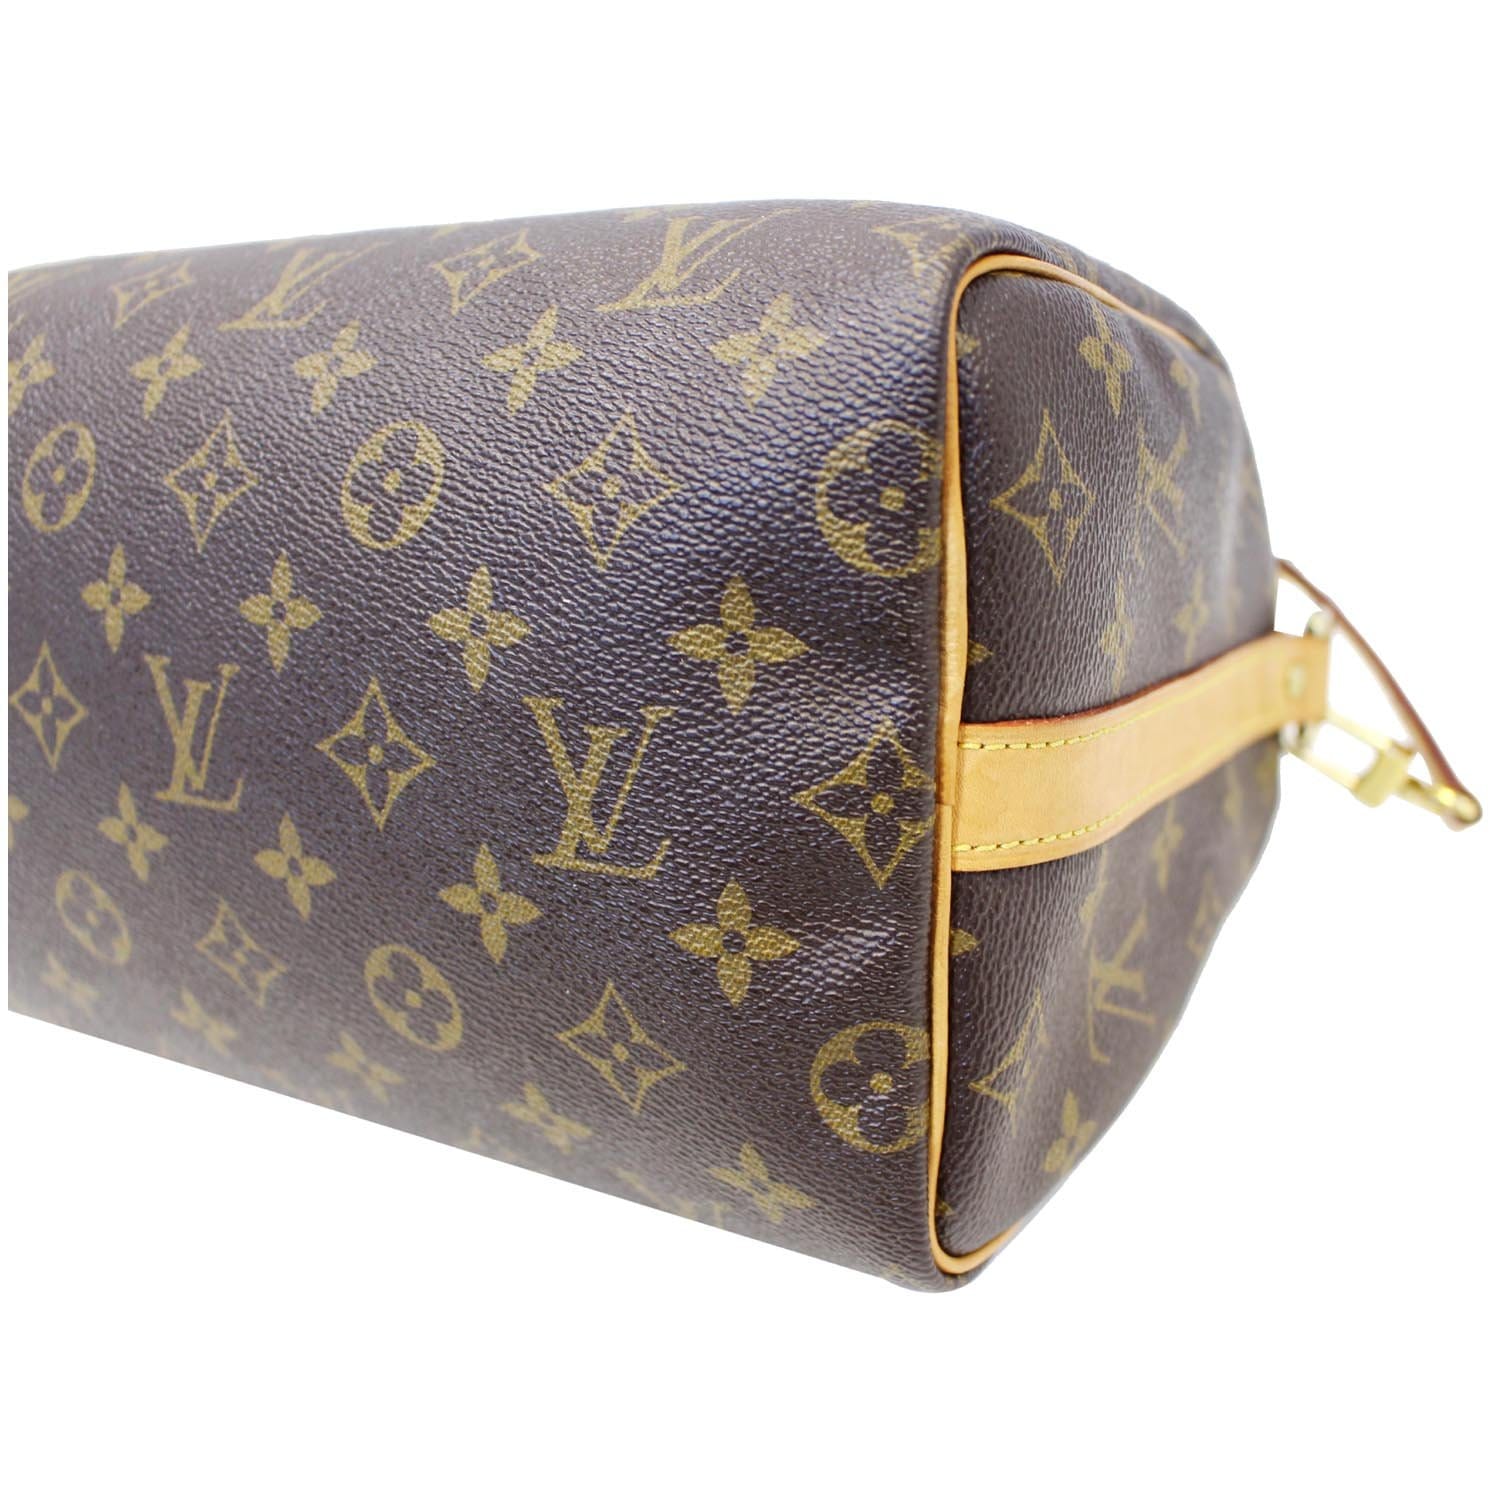 Speedy bandoulière leather handbag Louis Vuitton Burgundy in